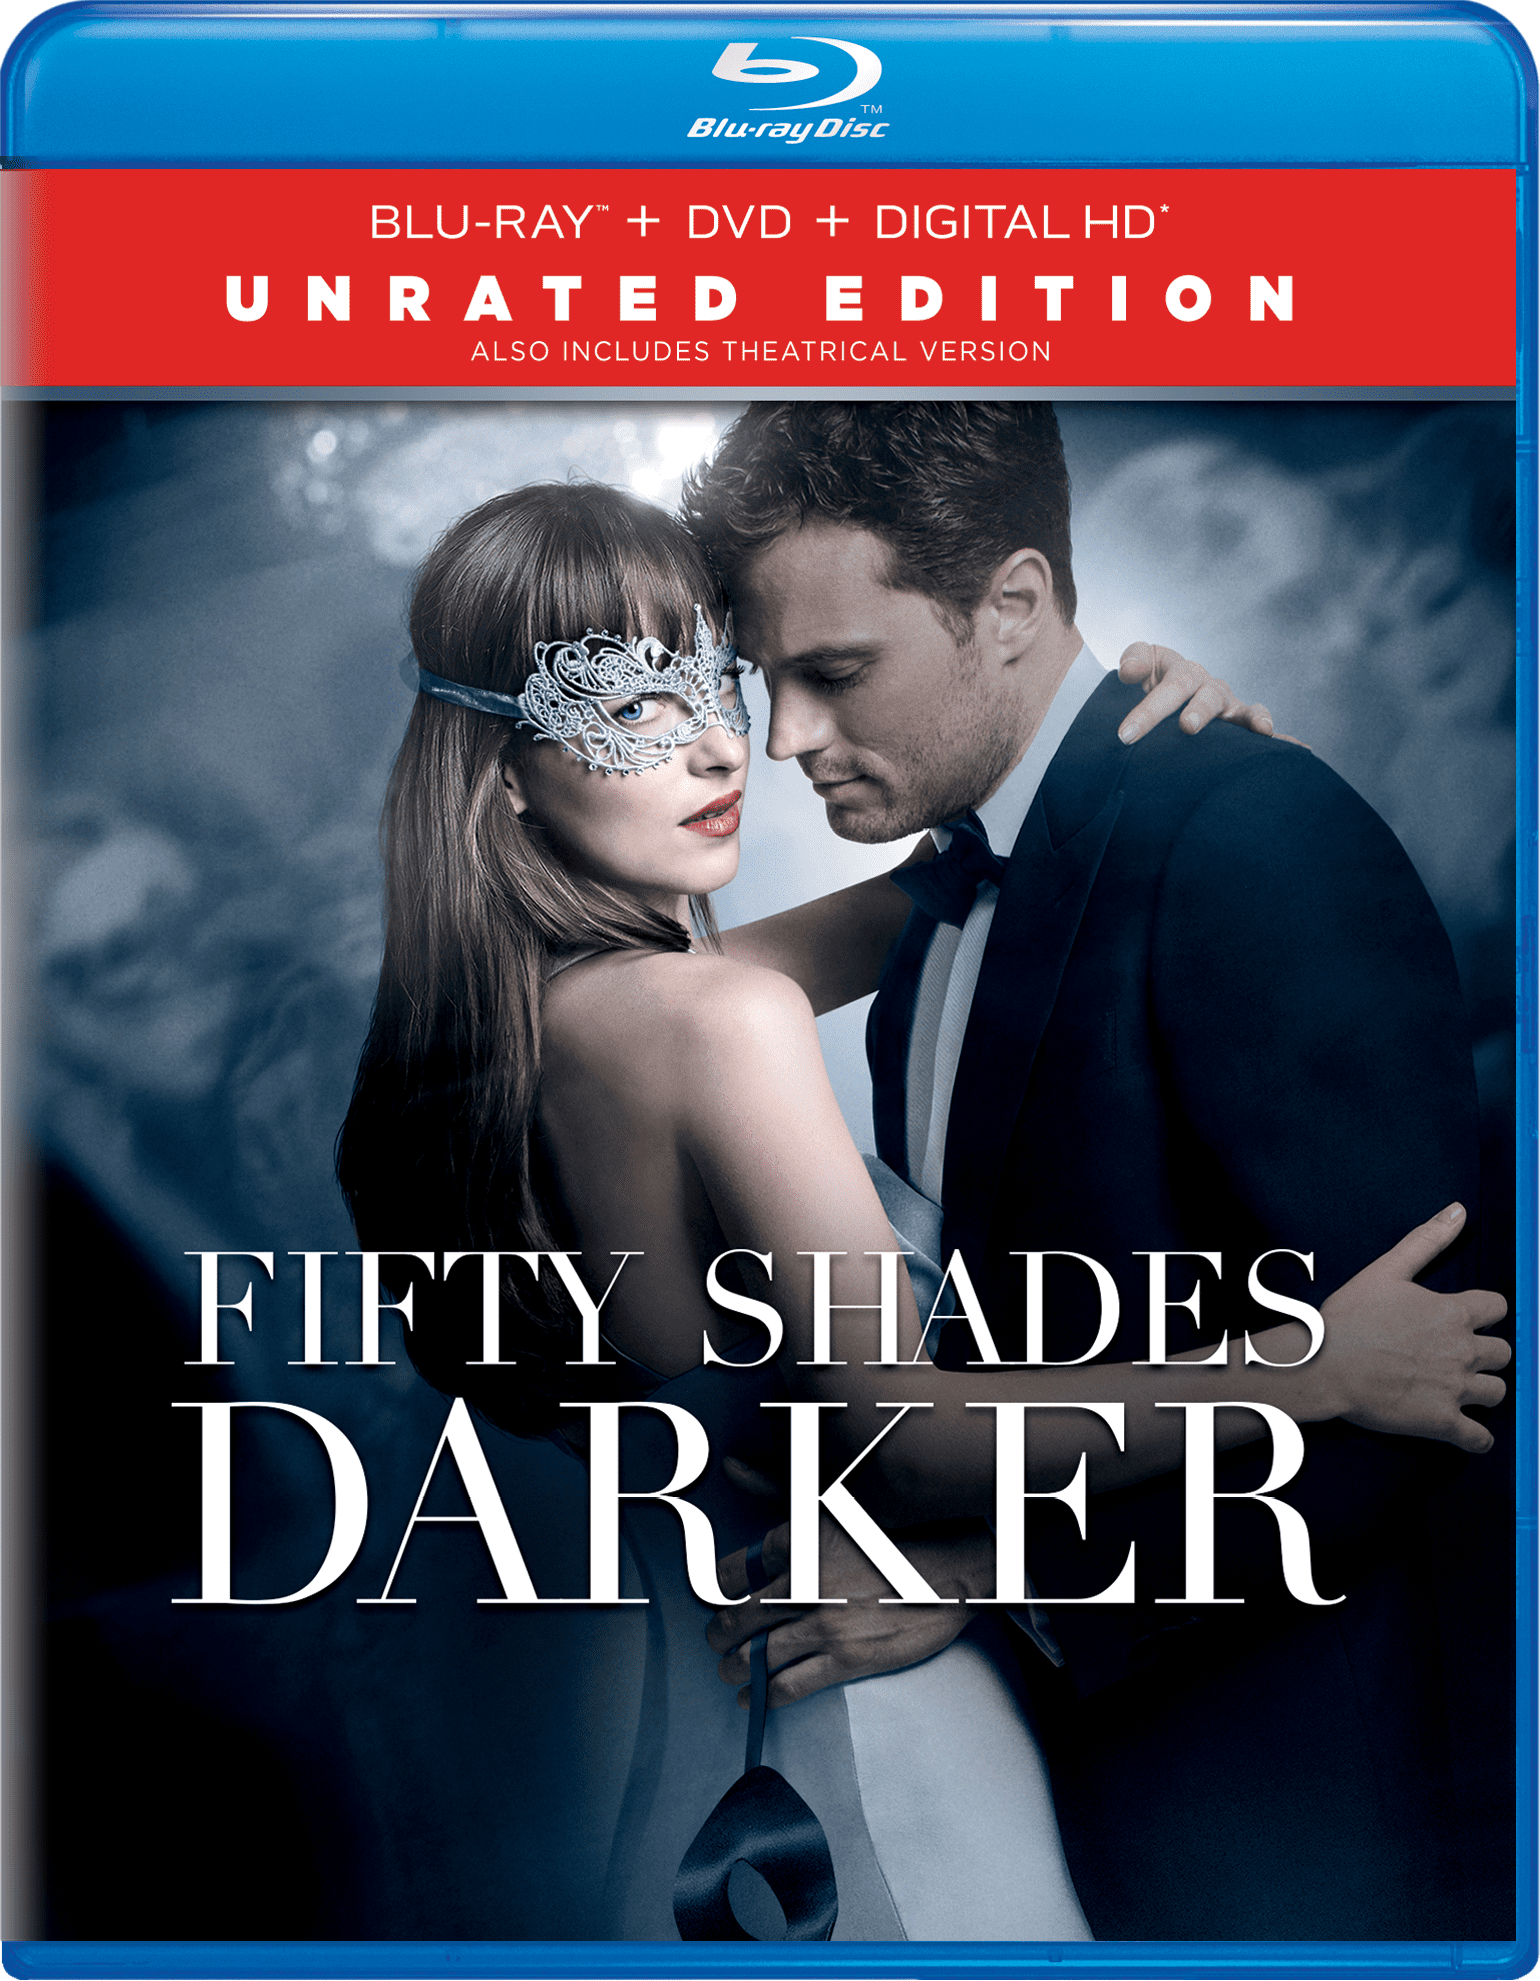 Fifty Shades Darker Unrated Edition Blu Ray Dvd Digital Hd 